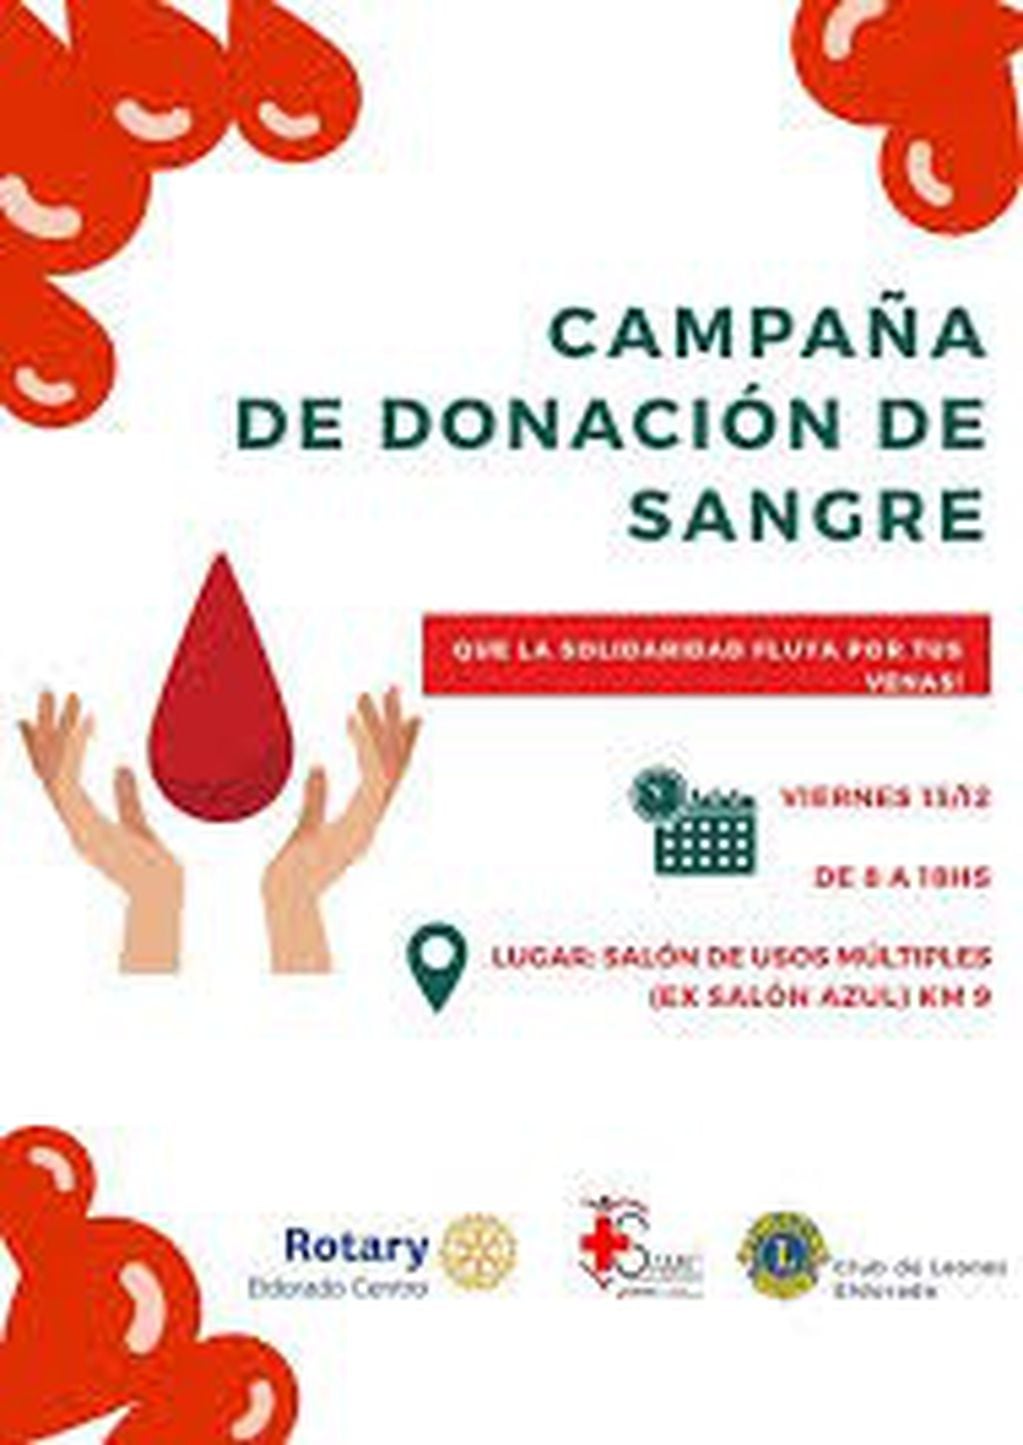 Campaña de donación de sangre Eldorado.